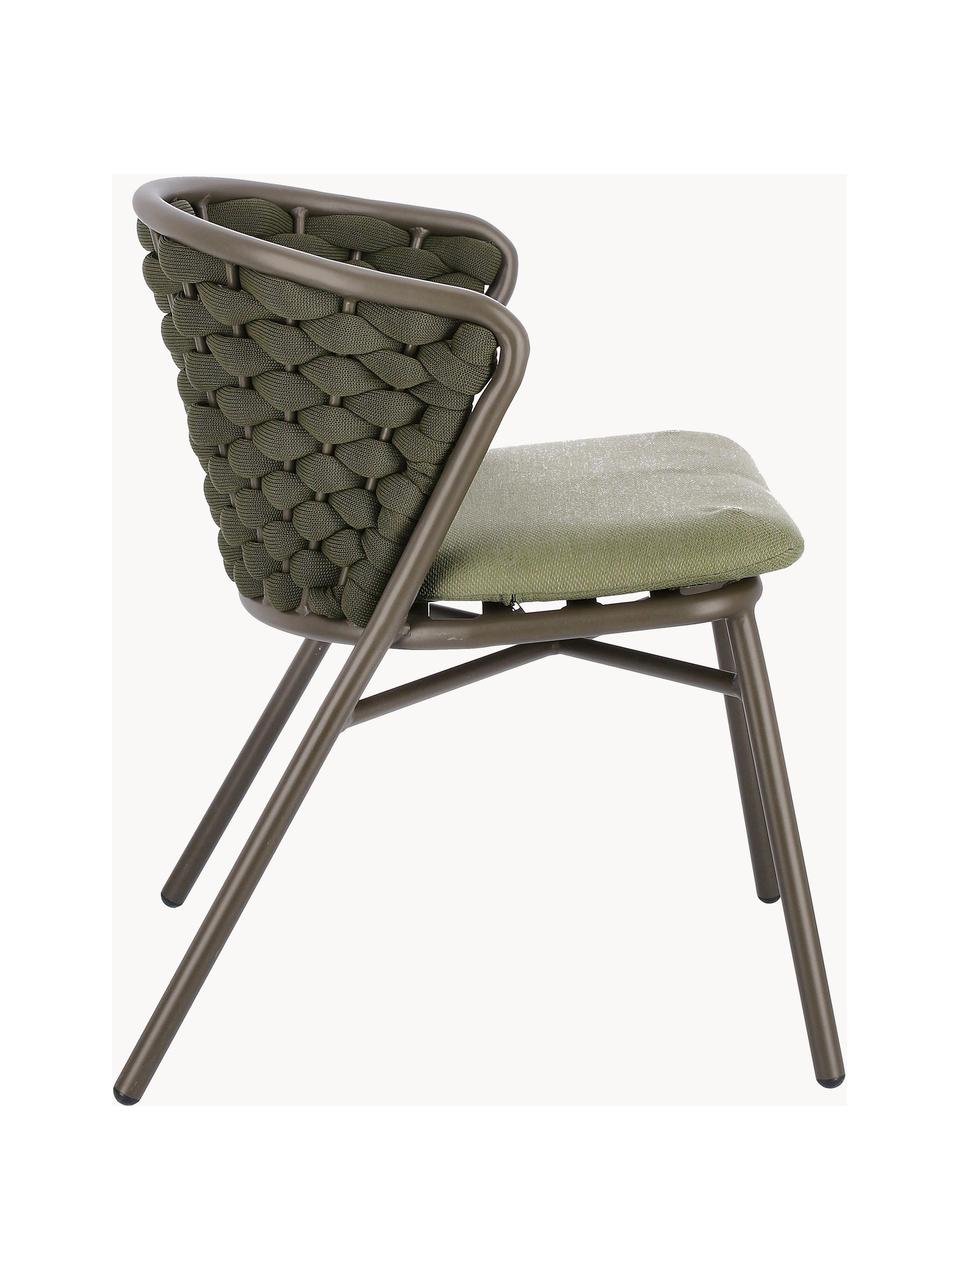 Záhradná stolička Harlow, Olivovozelená, hnedosivá, Š 62 x H 58 cm